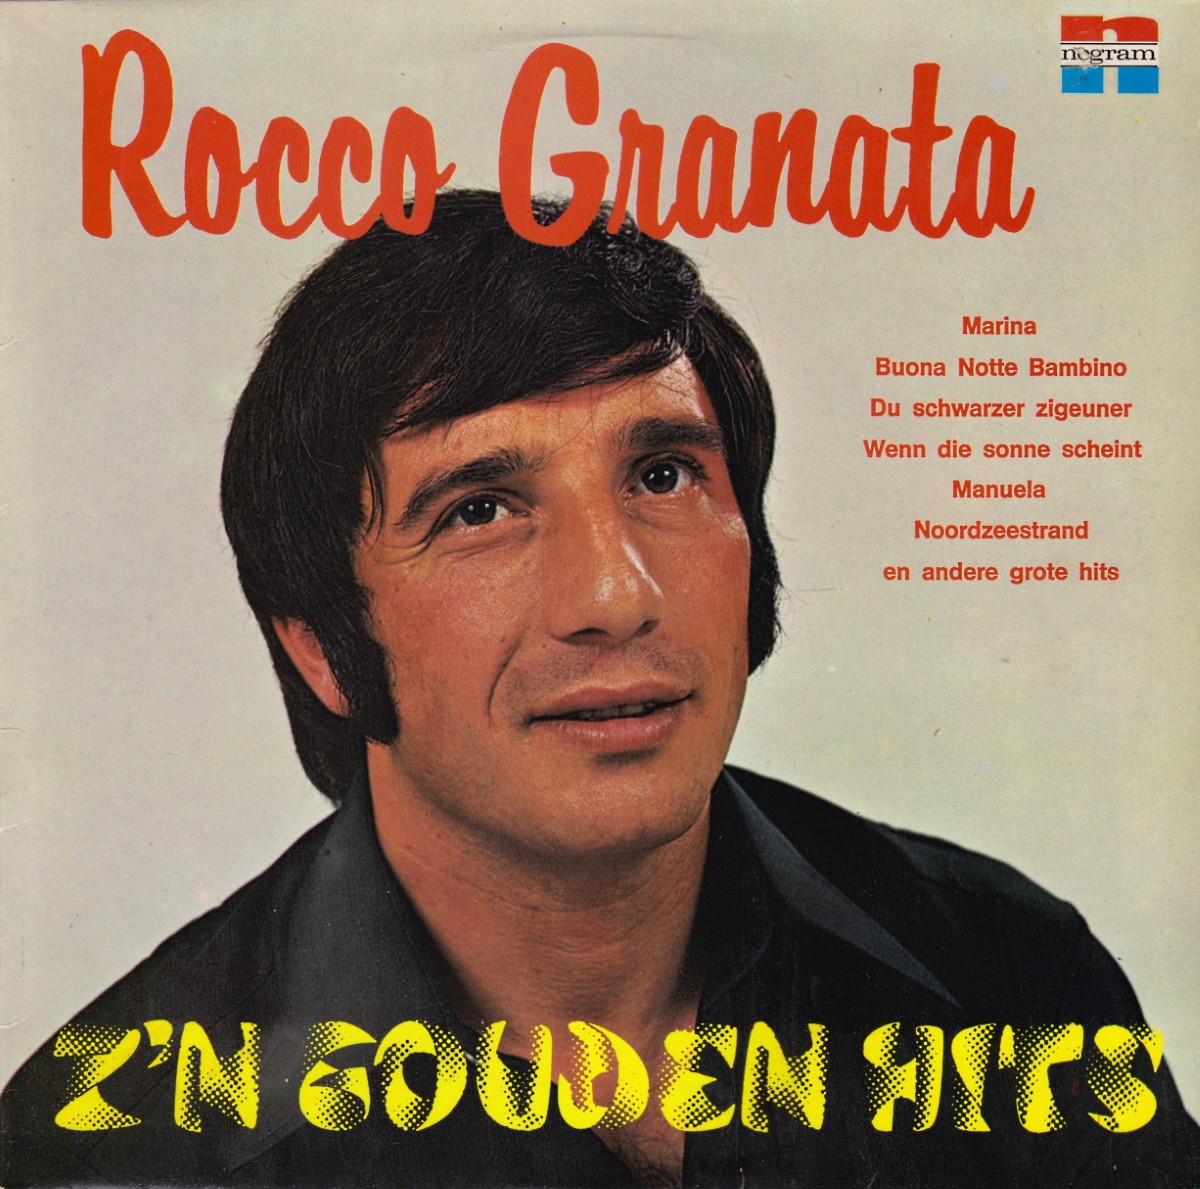 Rocco Granata - Zijn Gouden Hits (1971)